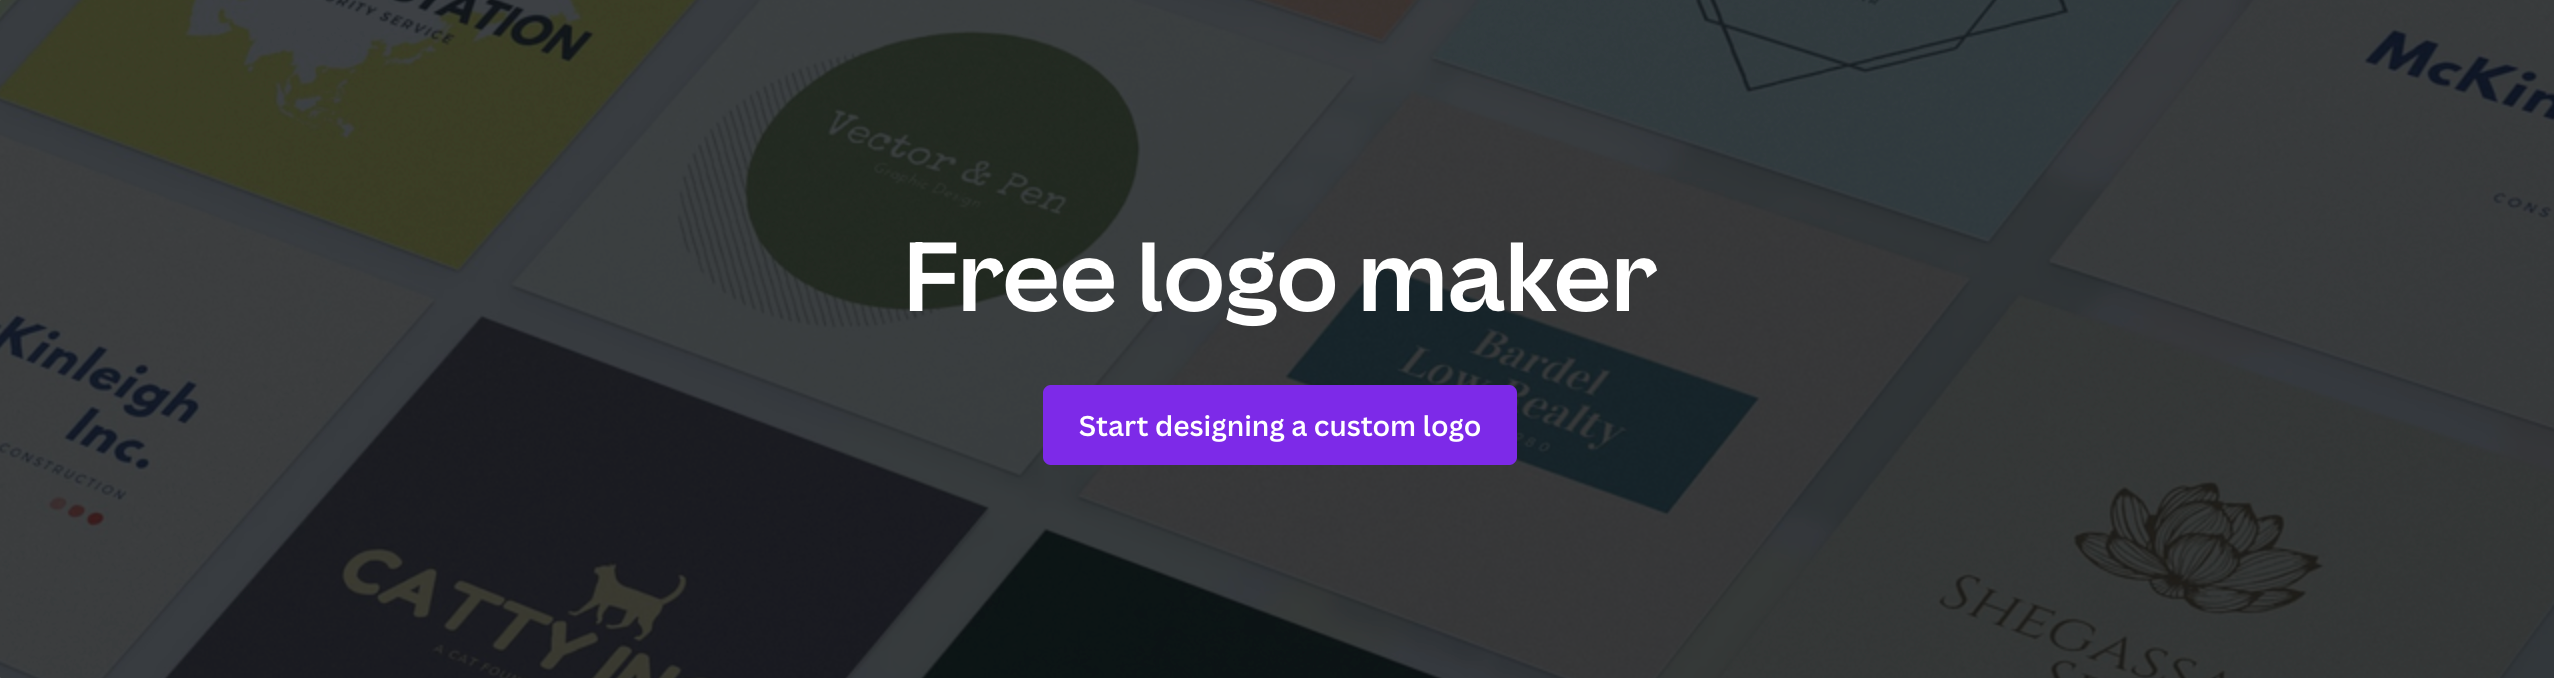 Canva logo maker homepage.